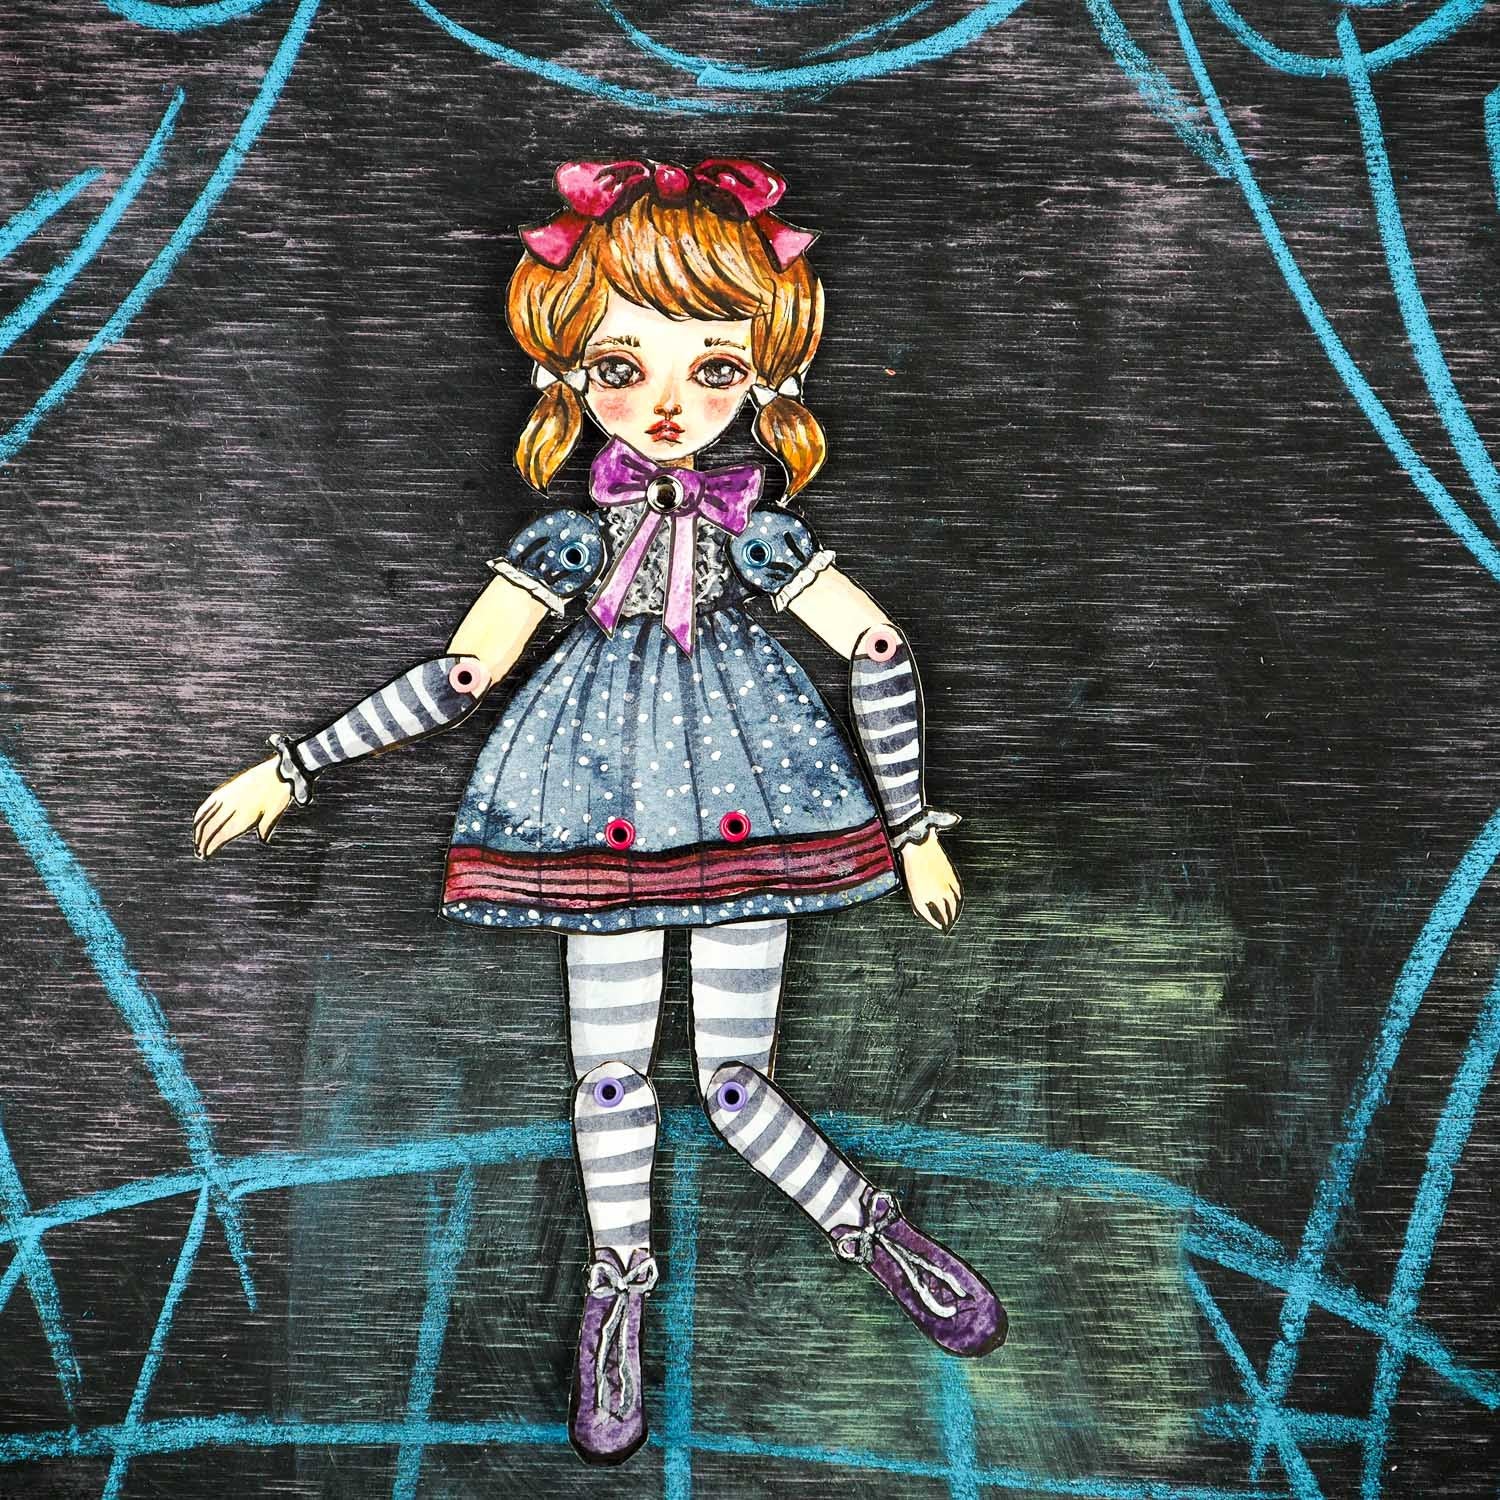 Original dress-up paper doll by Danita. Watercolor painting and mixed media, pencil, ink, charcoal create beautiful wall art doll.